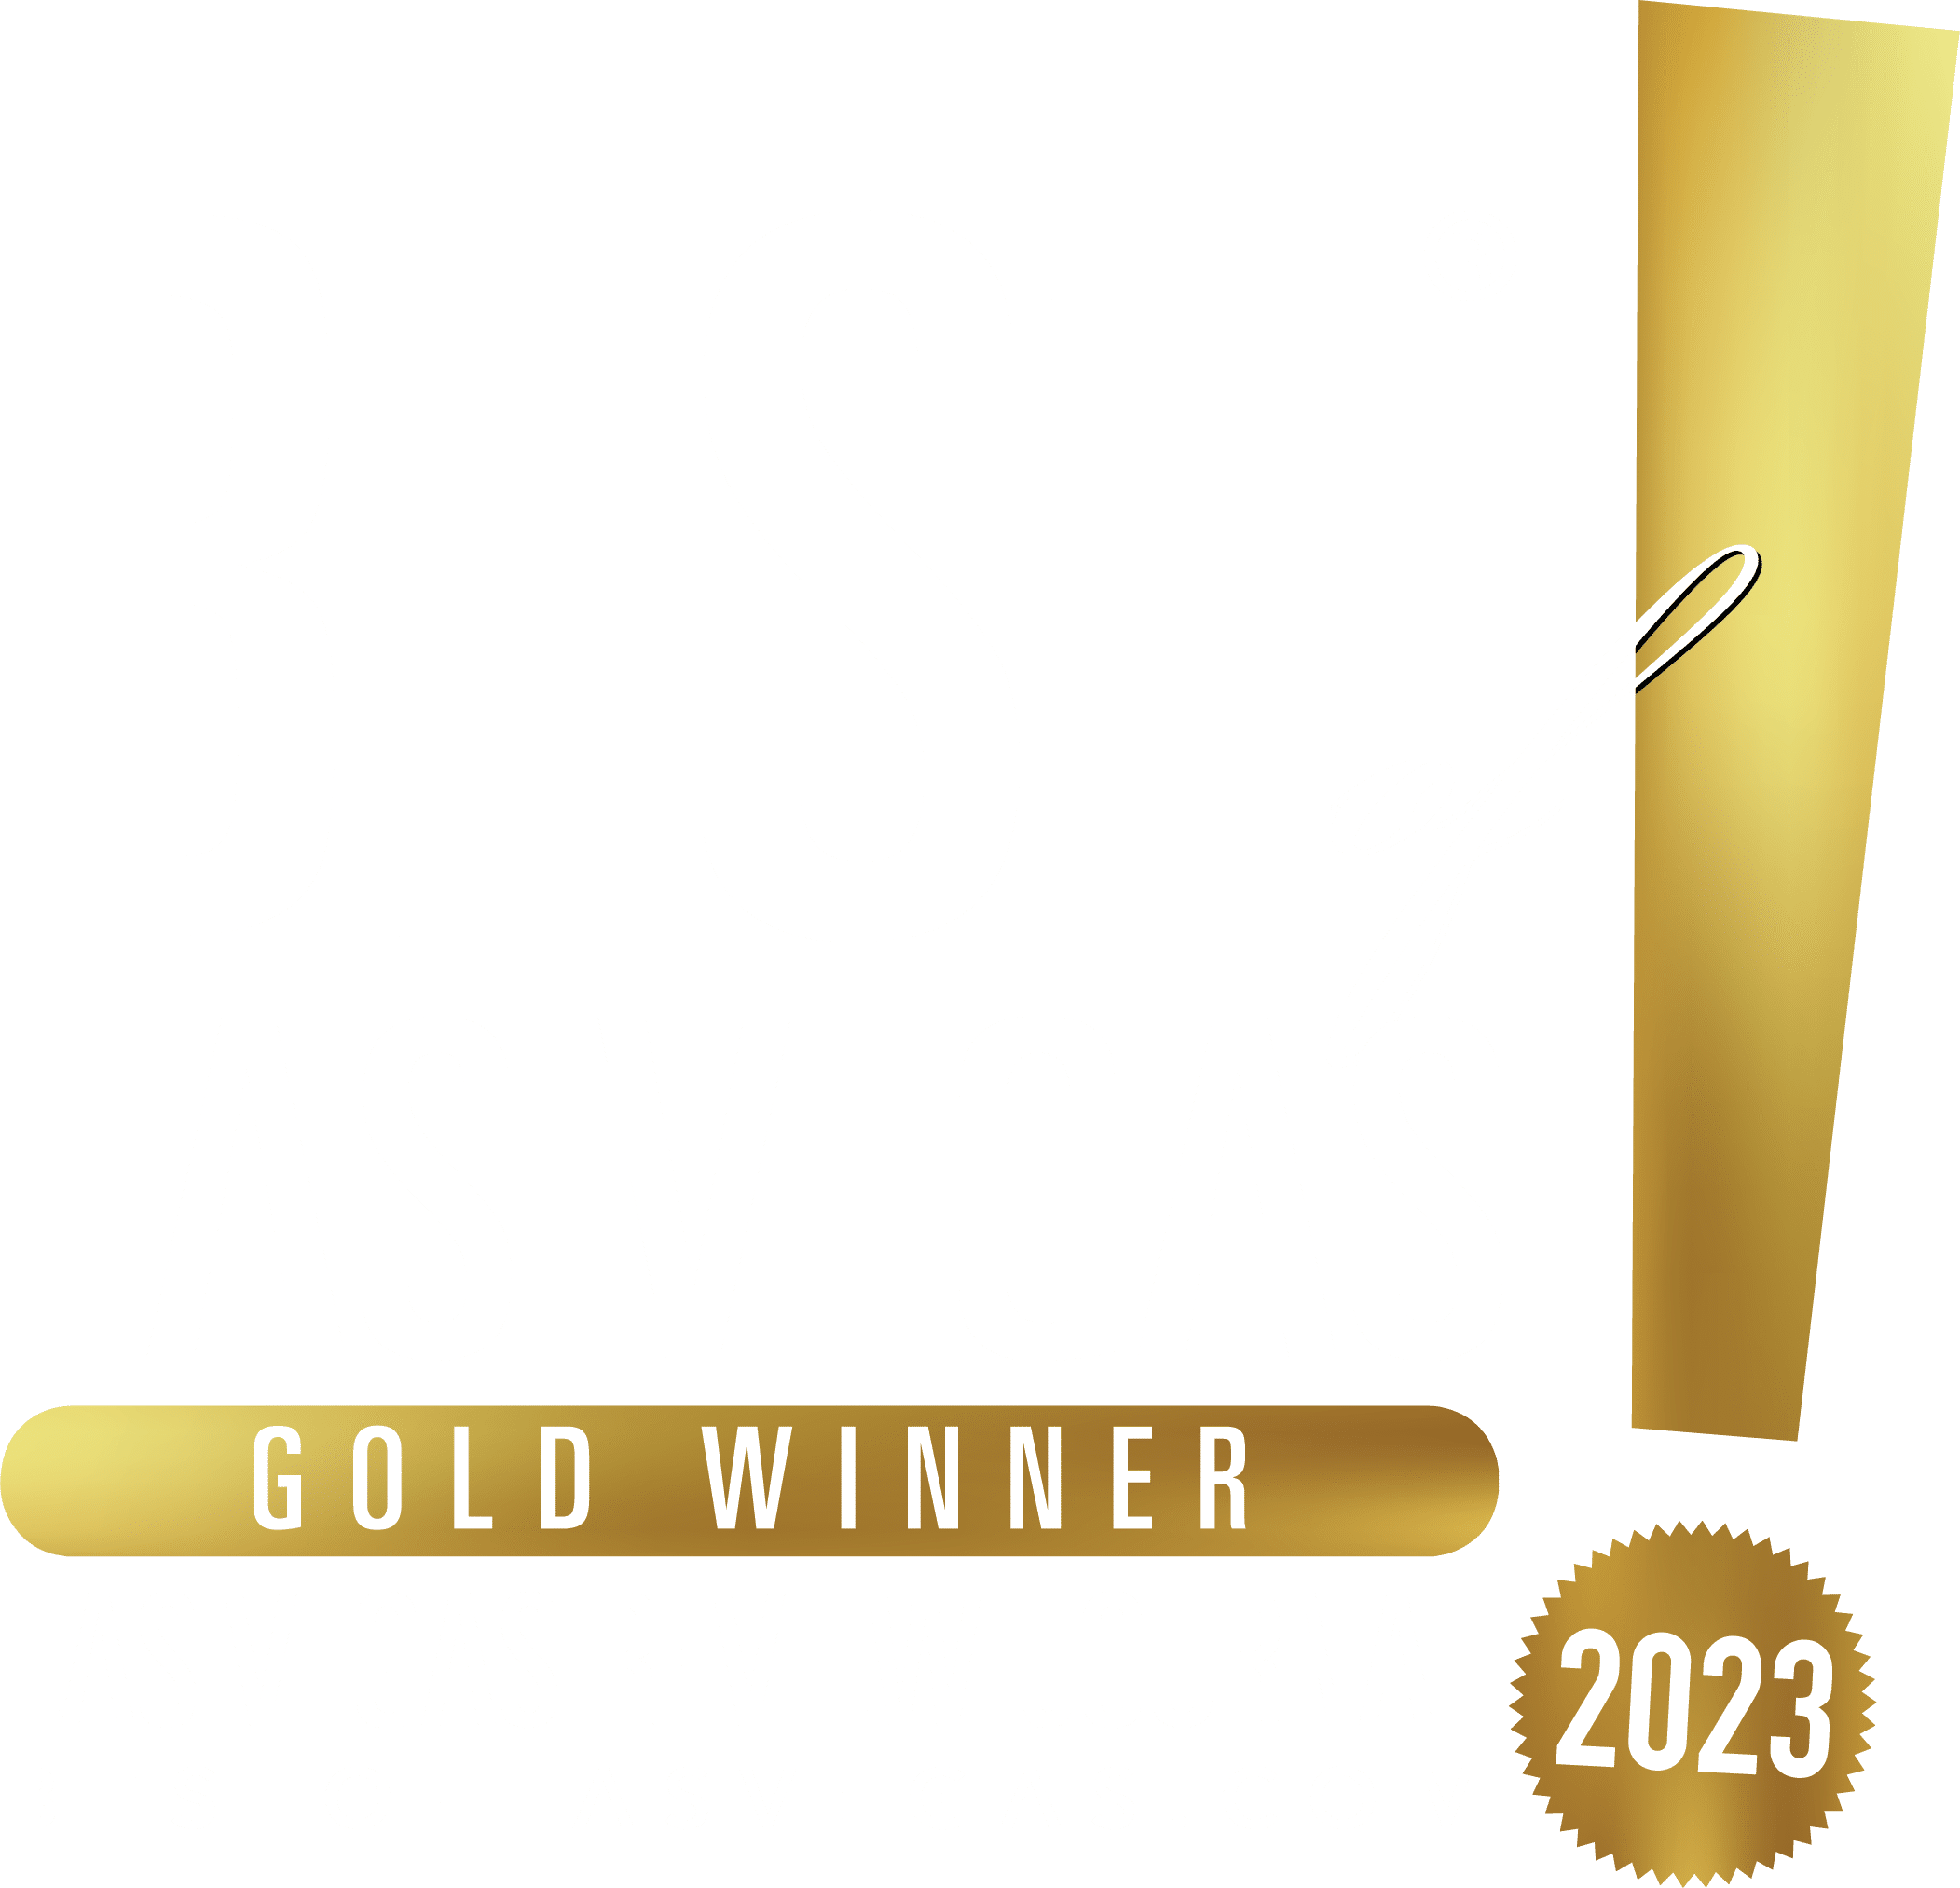 Closets Las Vegas - Voted Best Closet Company in 2023 - Best of Las Vegas Winner